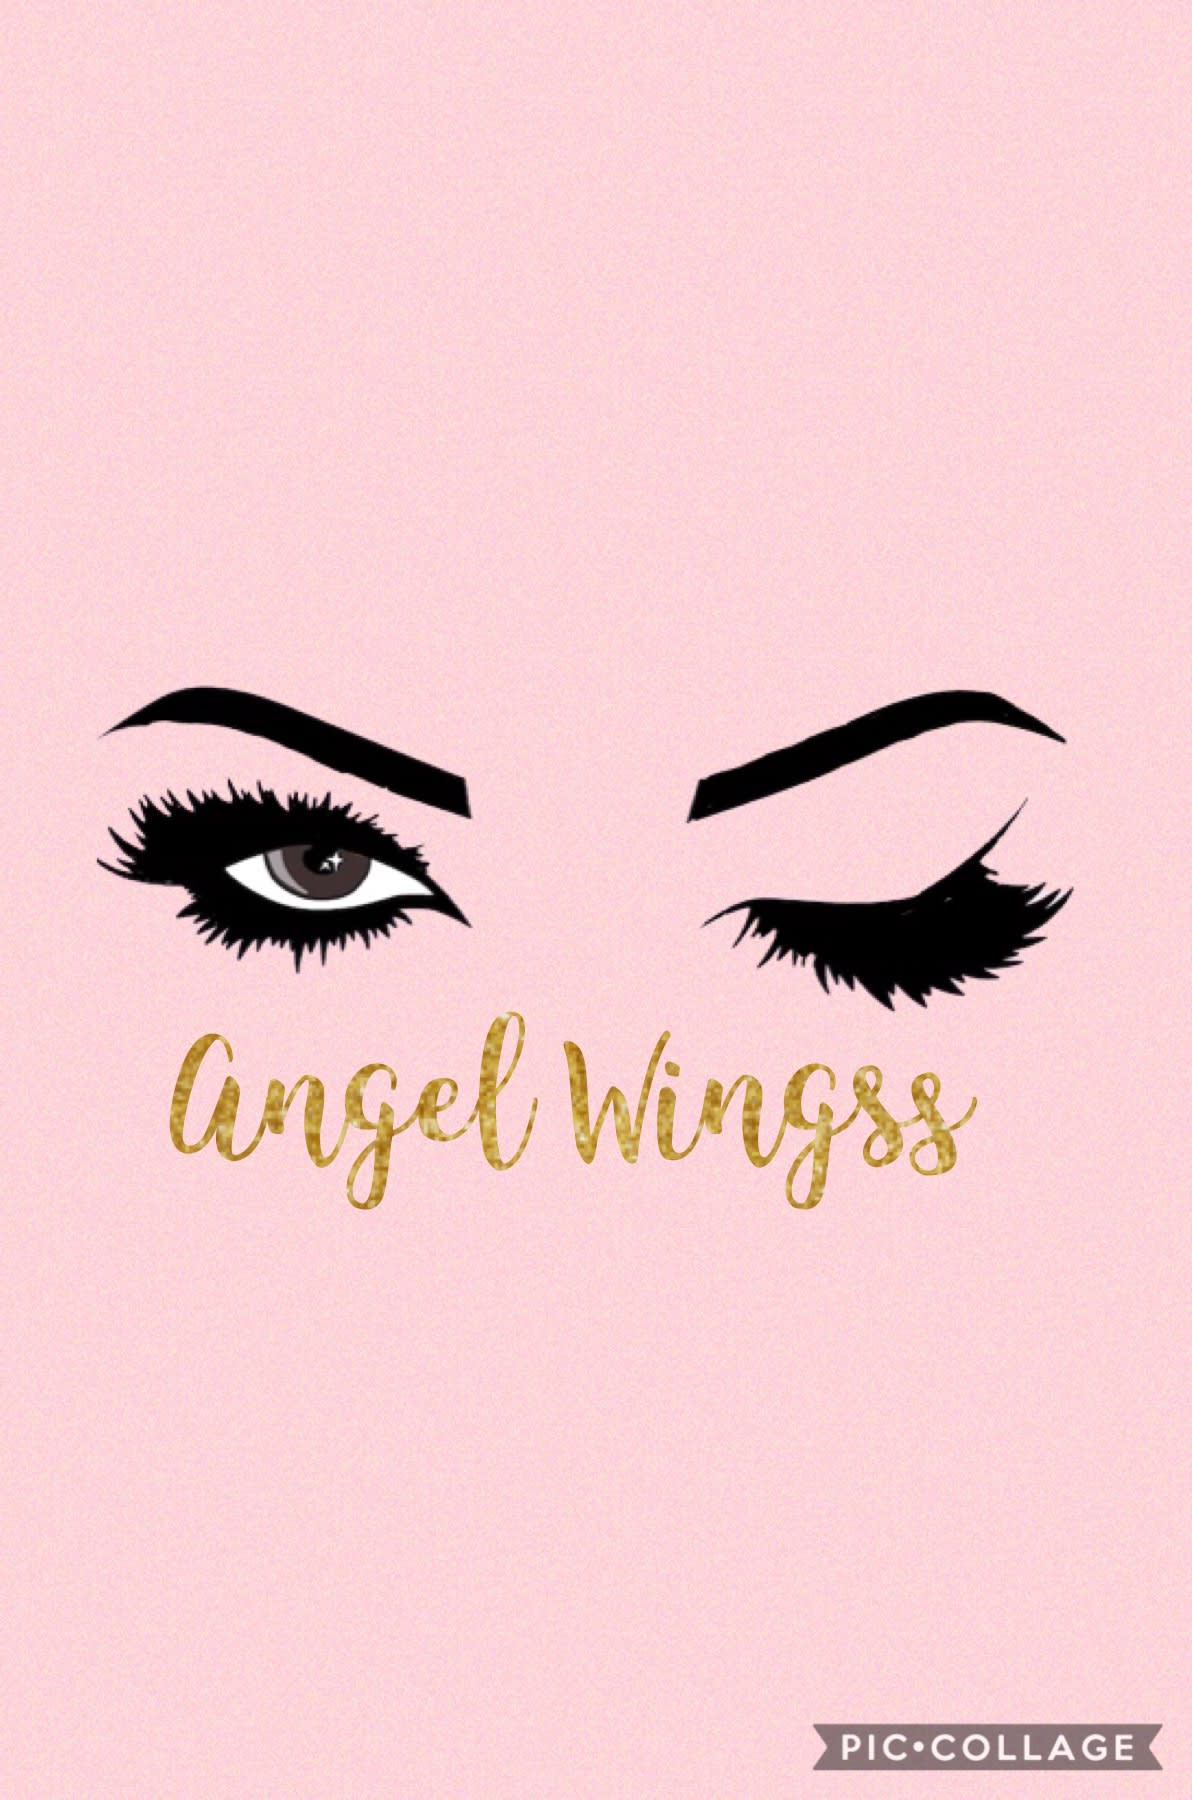 Angel Wings Cosmetics